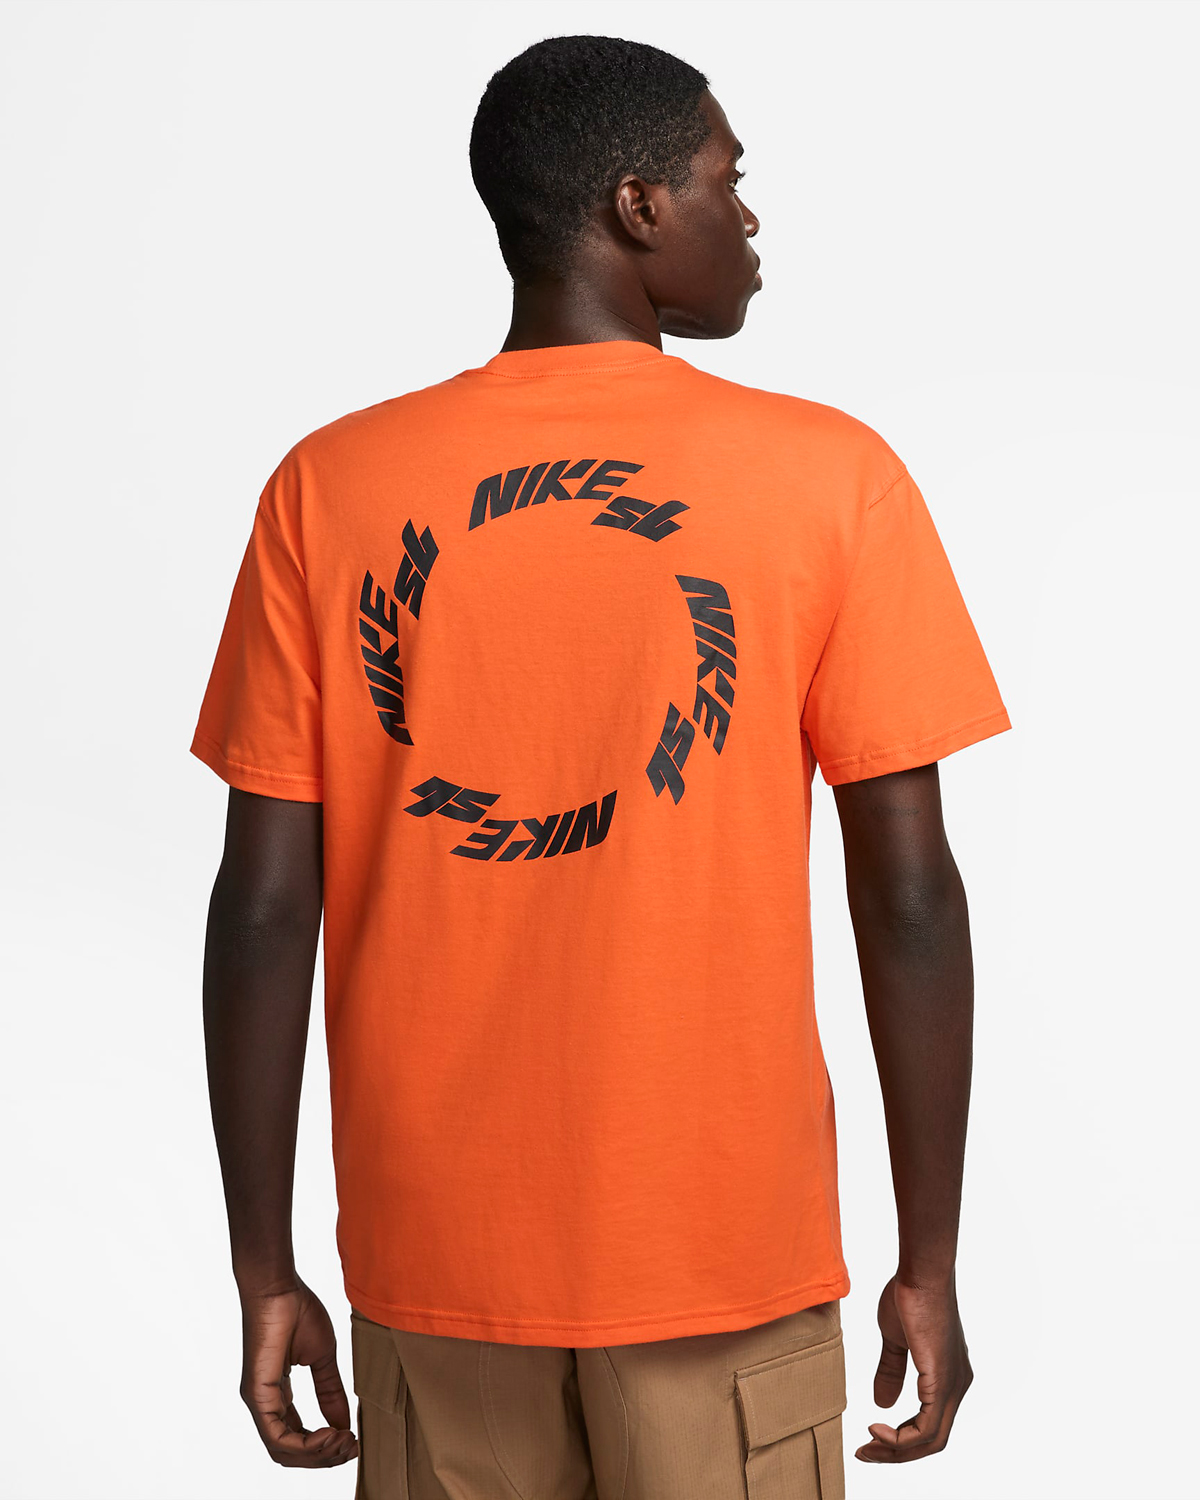 Nike-SB-T-Shirt-Safety-Orange-2